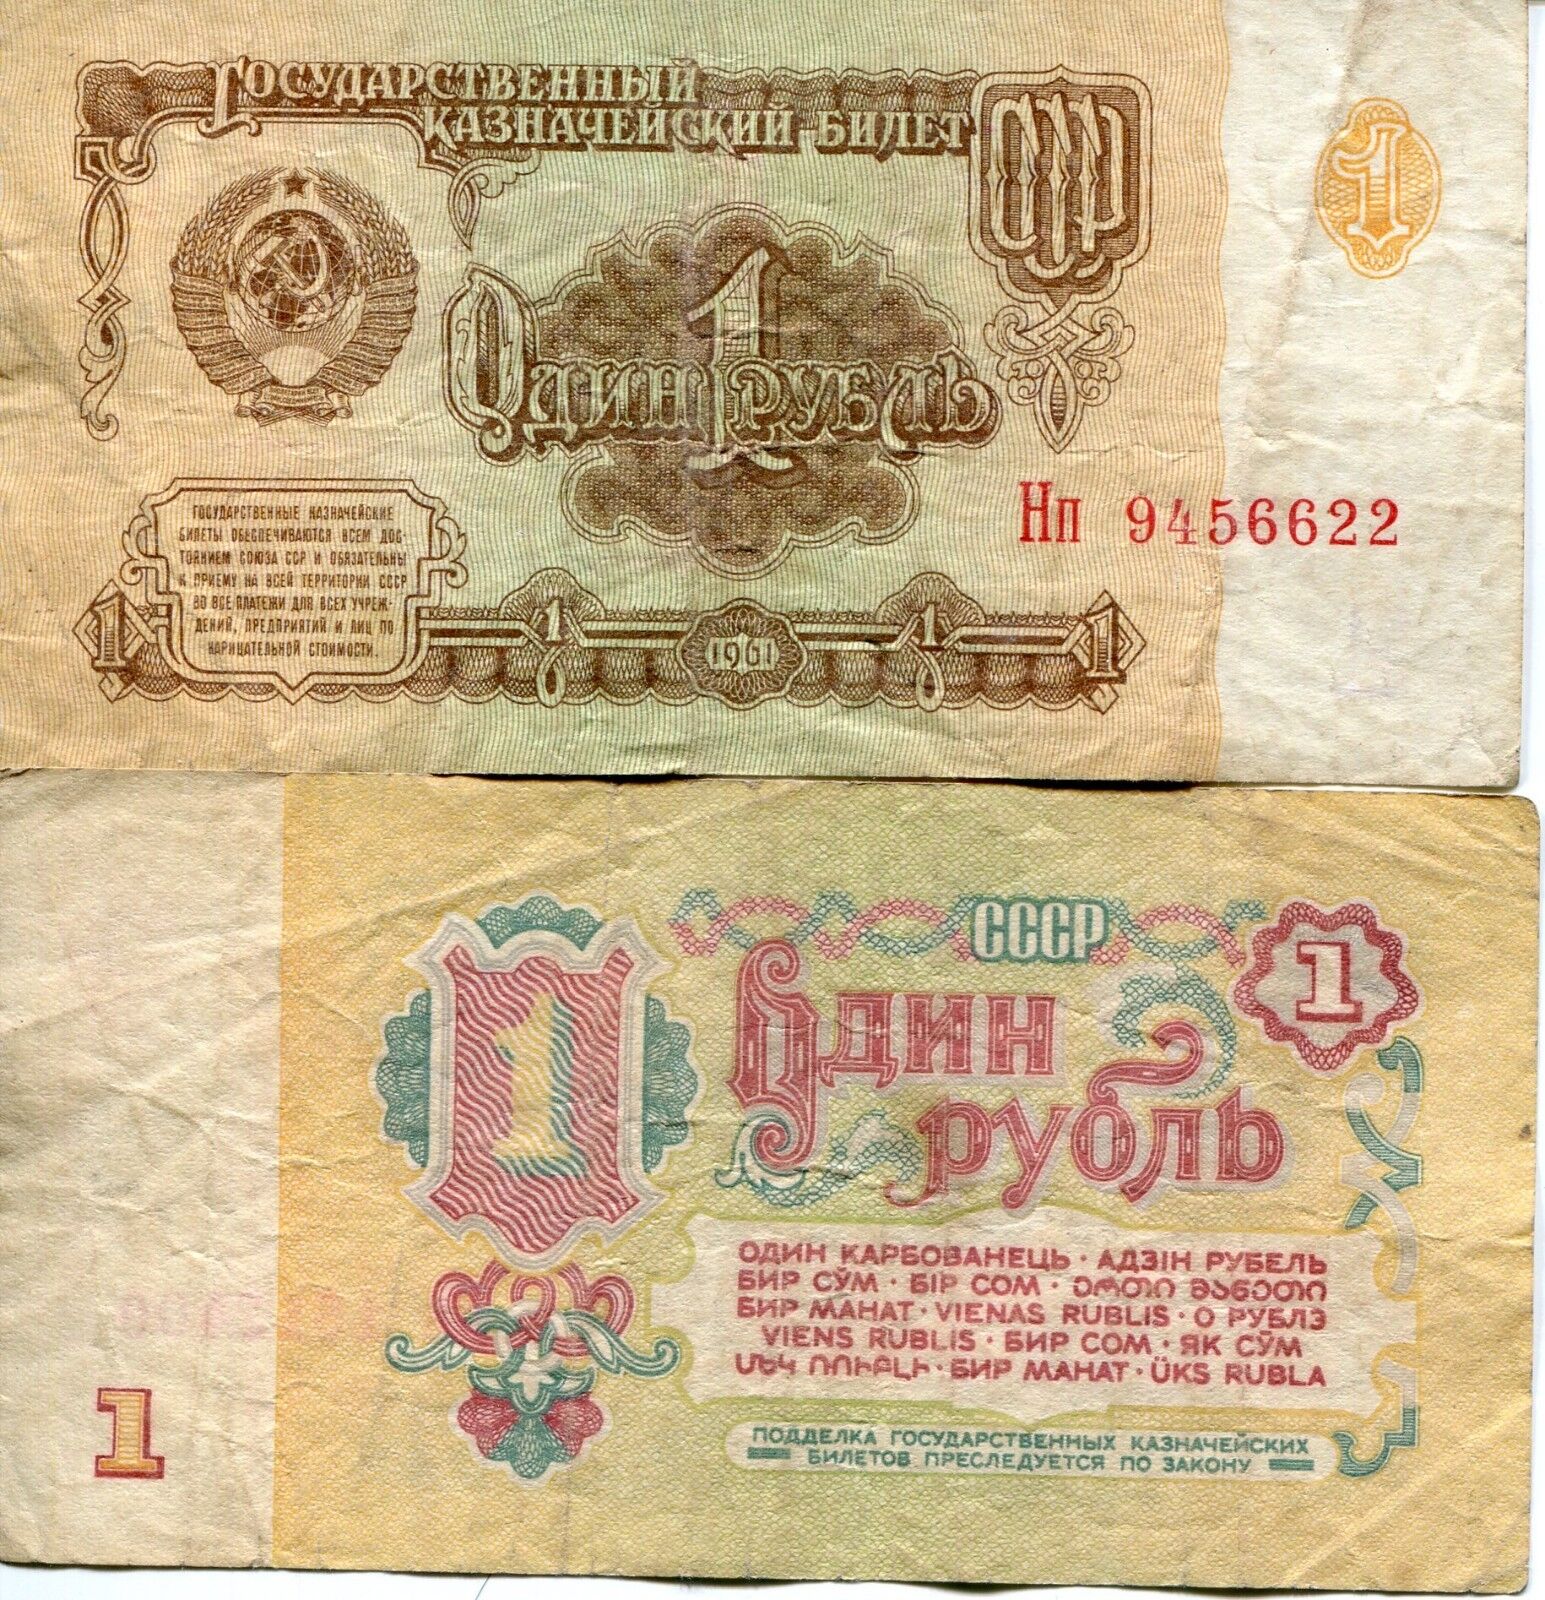 Soviet Union 1961 1 One Ruble Banknote Lenin Communist Currency десять Рубляри